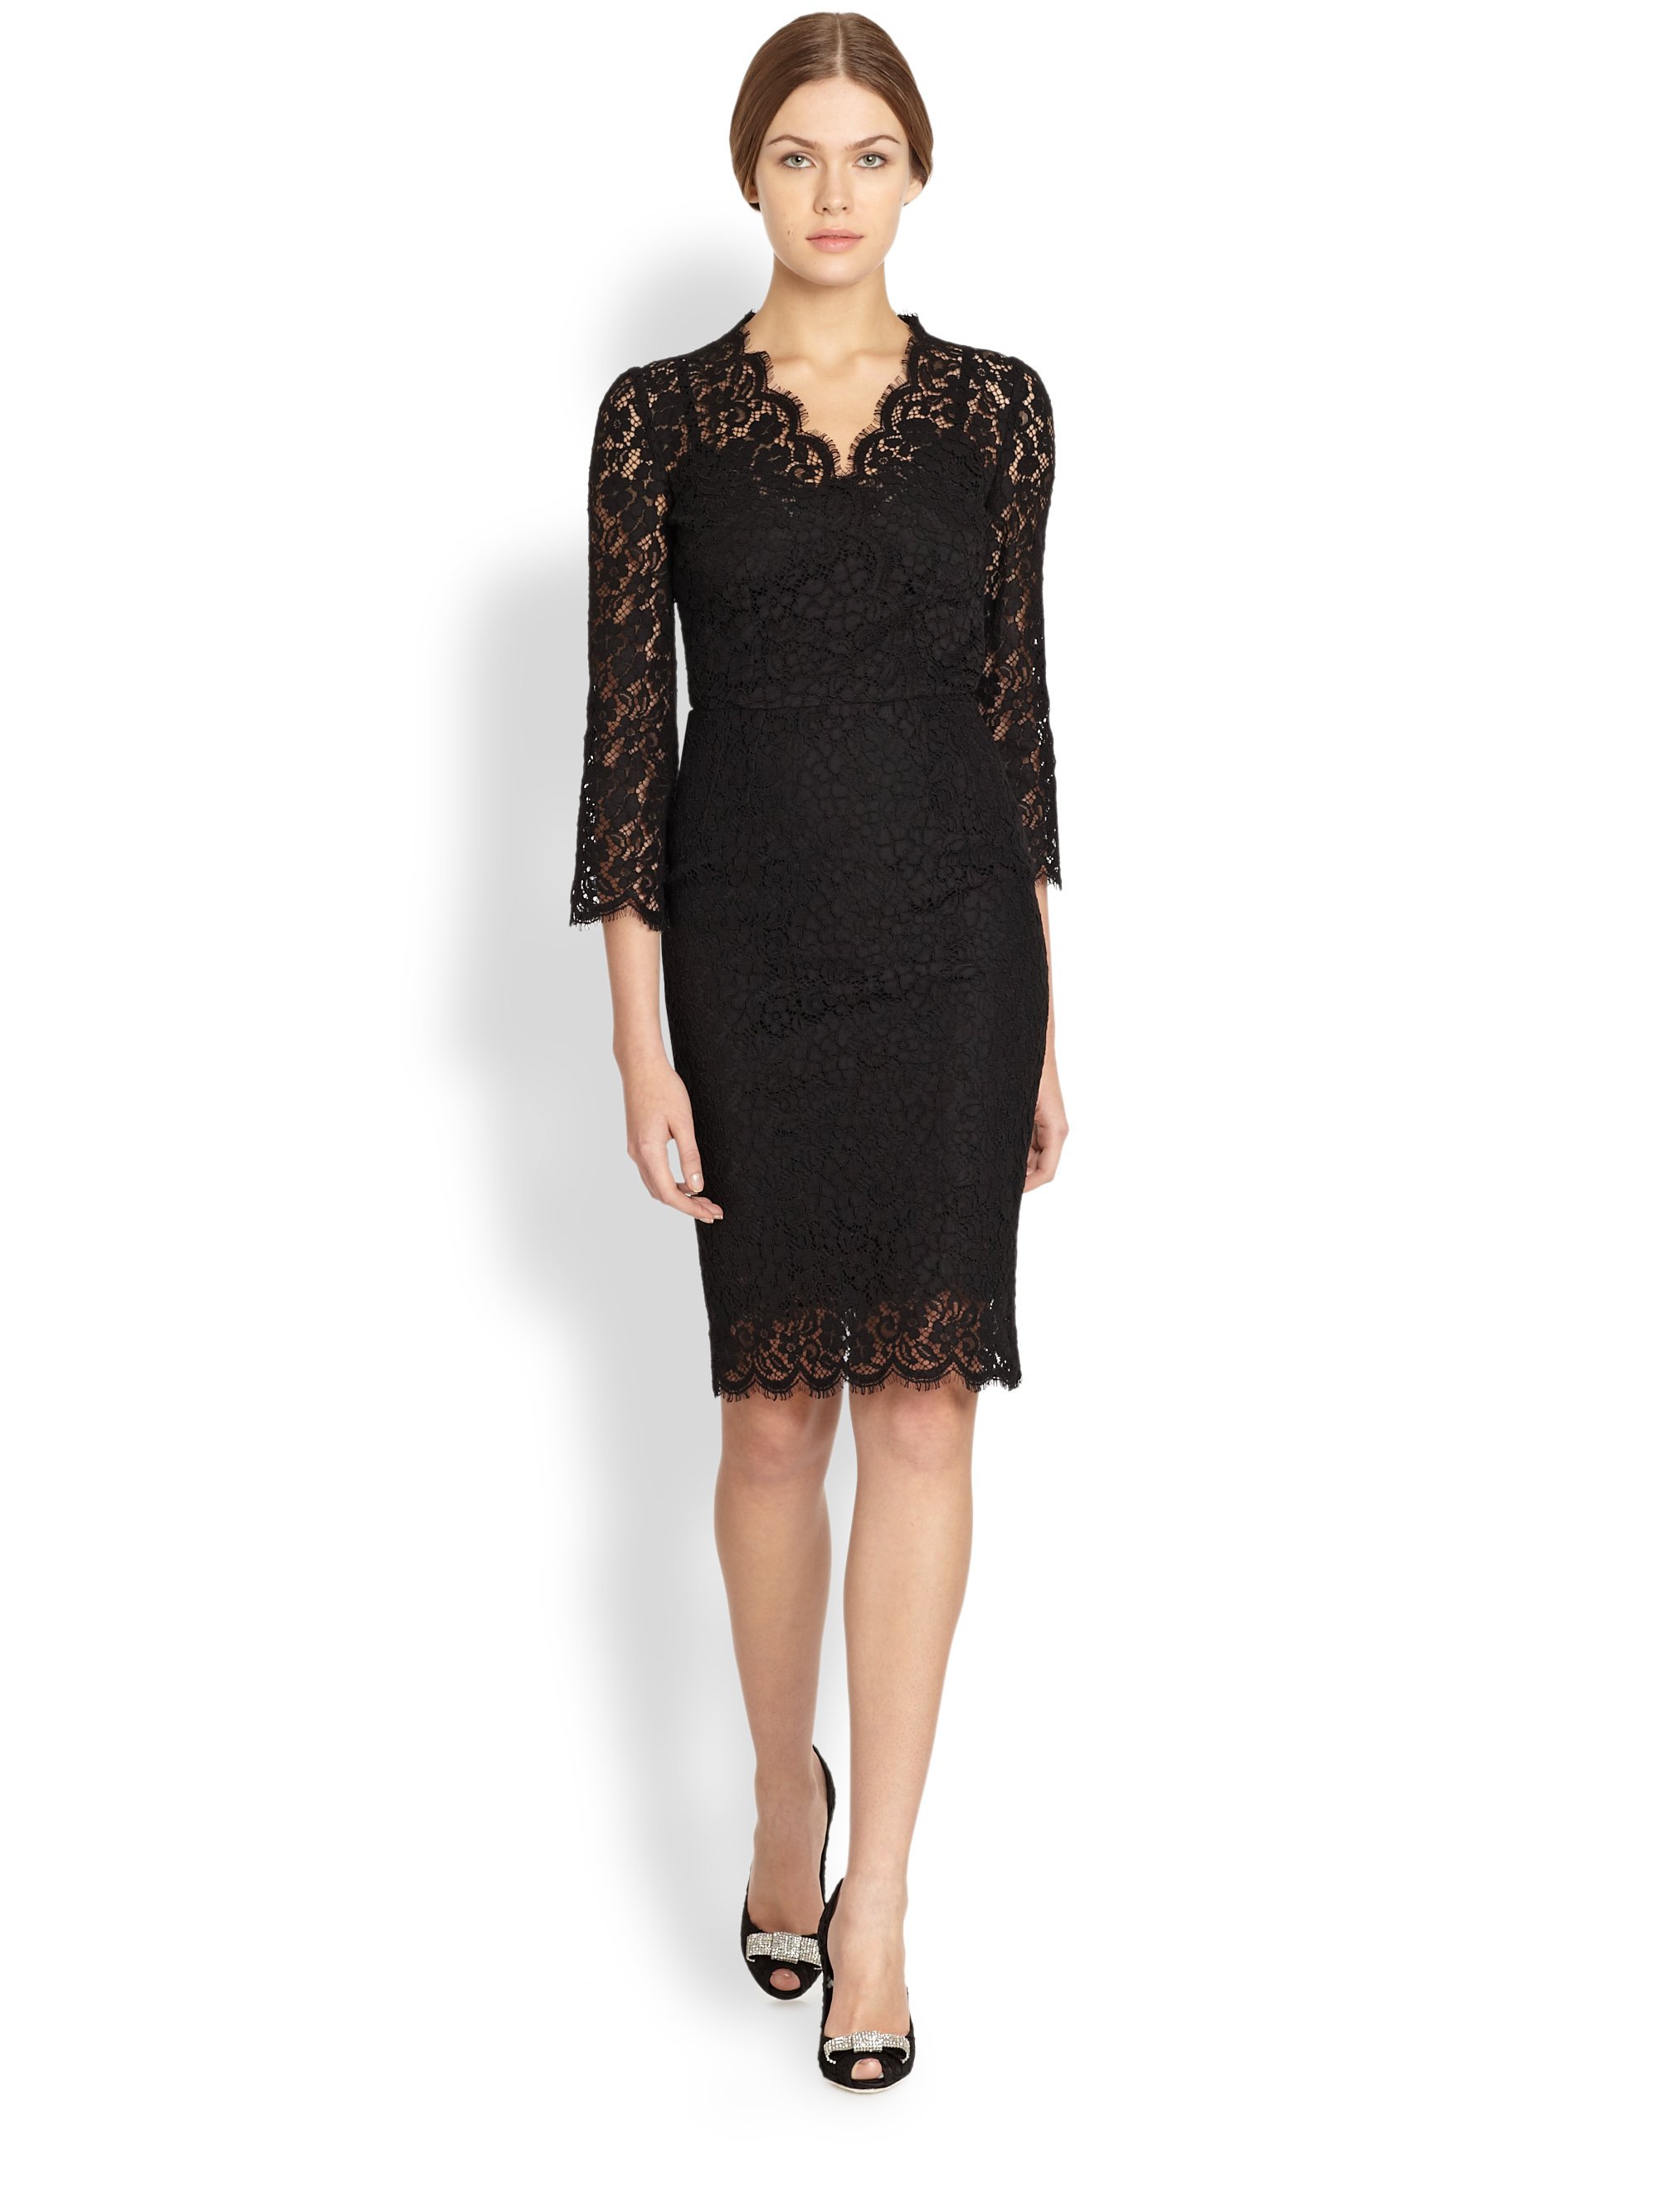 Dolce & Gabbana Lace Dress in Black | Lyst